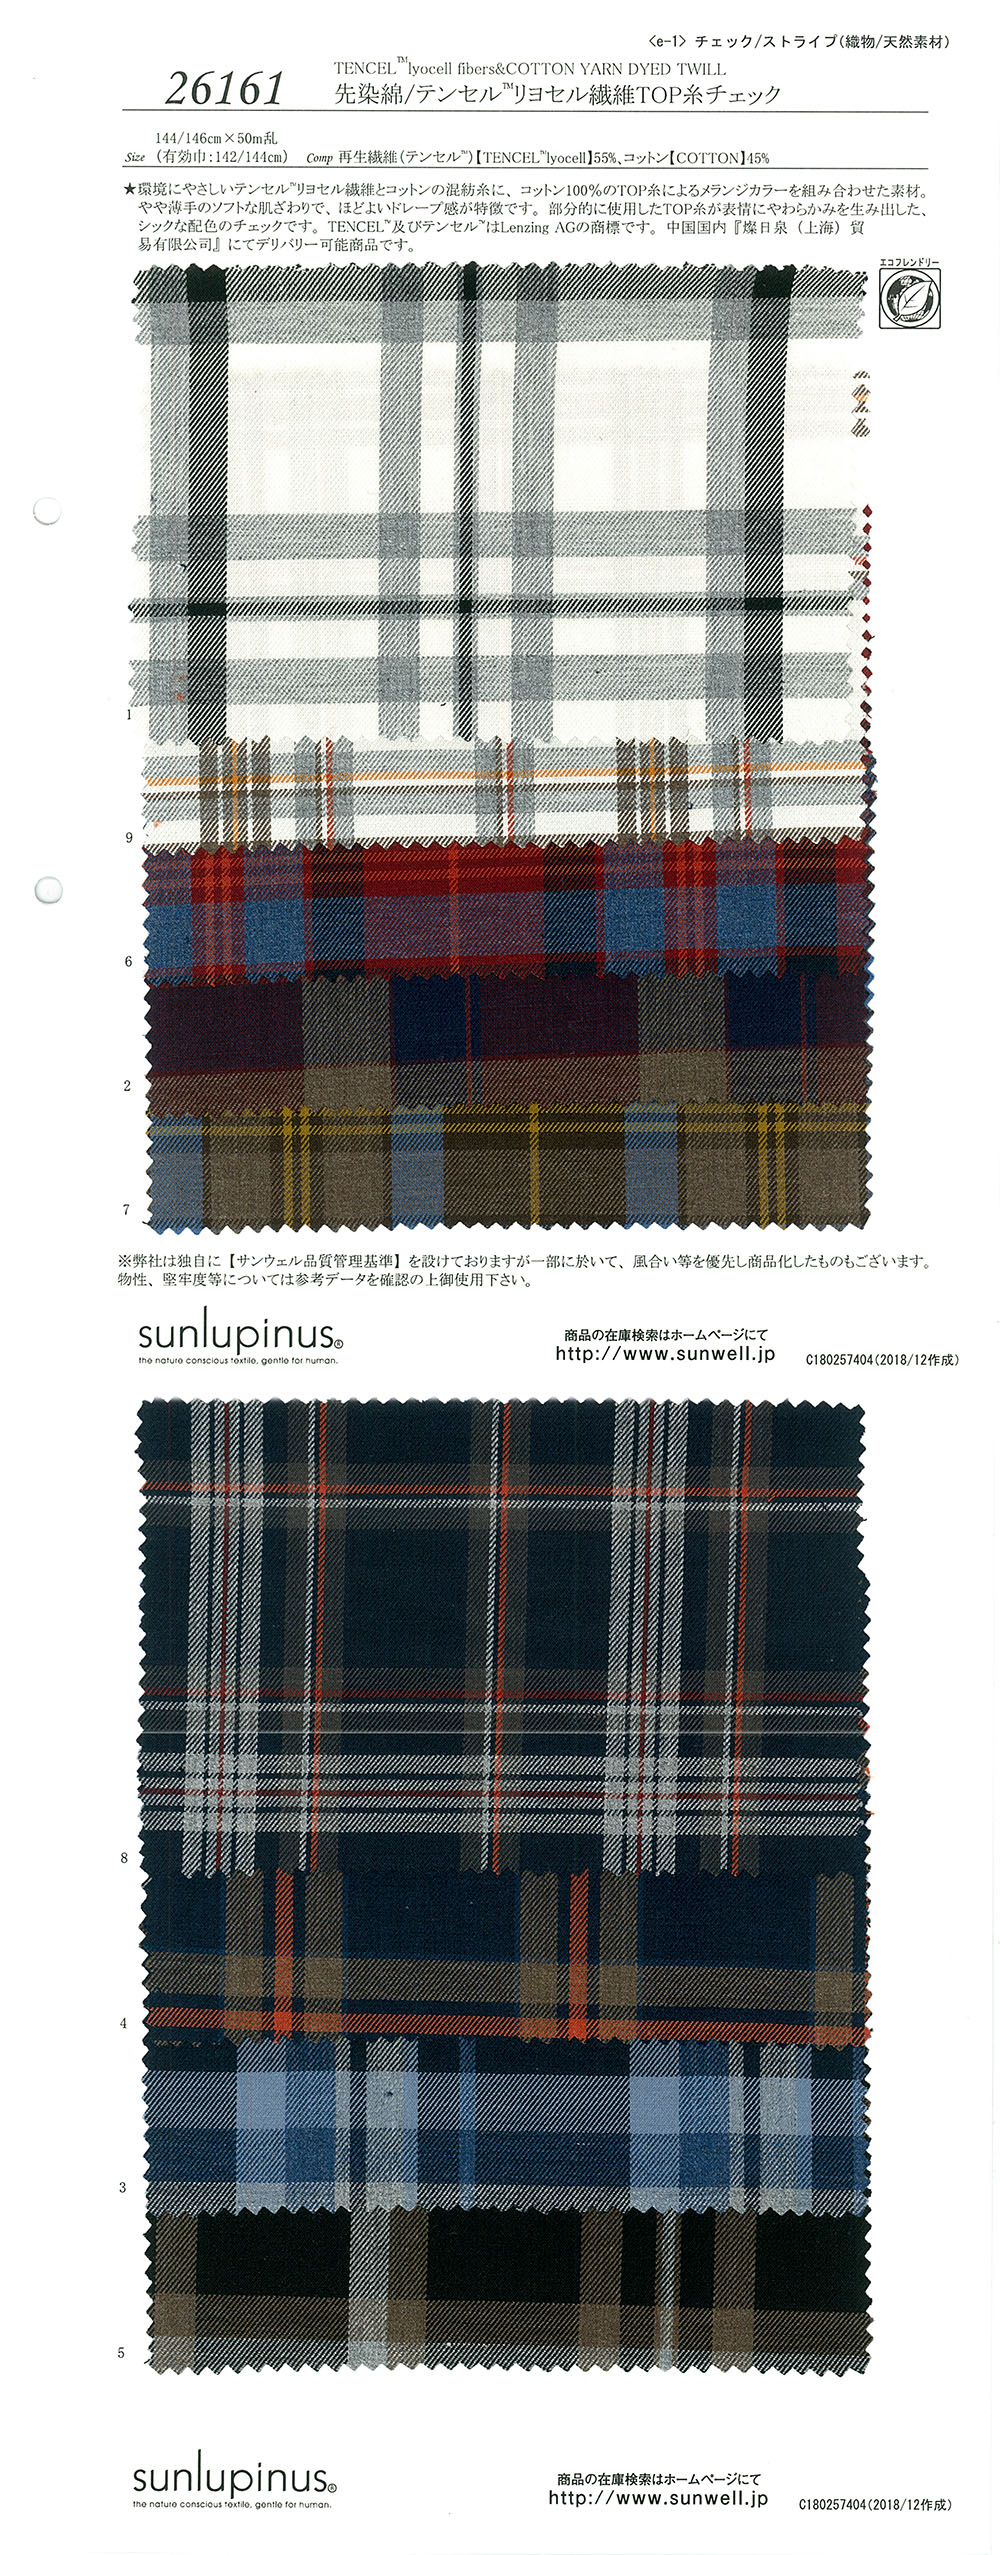 26161 Garngefärbte Baumwolle / Tencel (TM) Lyocell-Faser TOP Thread Check[Textilgewebe] SUNWELL